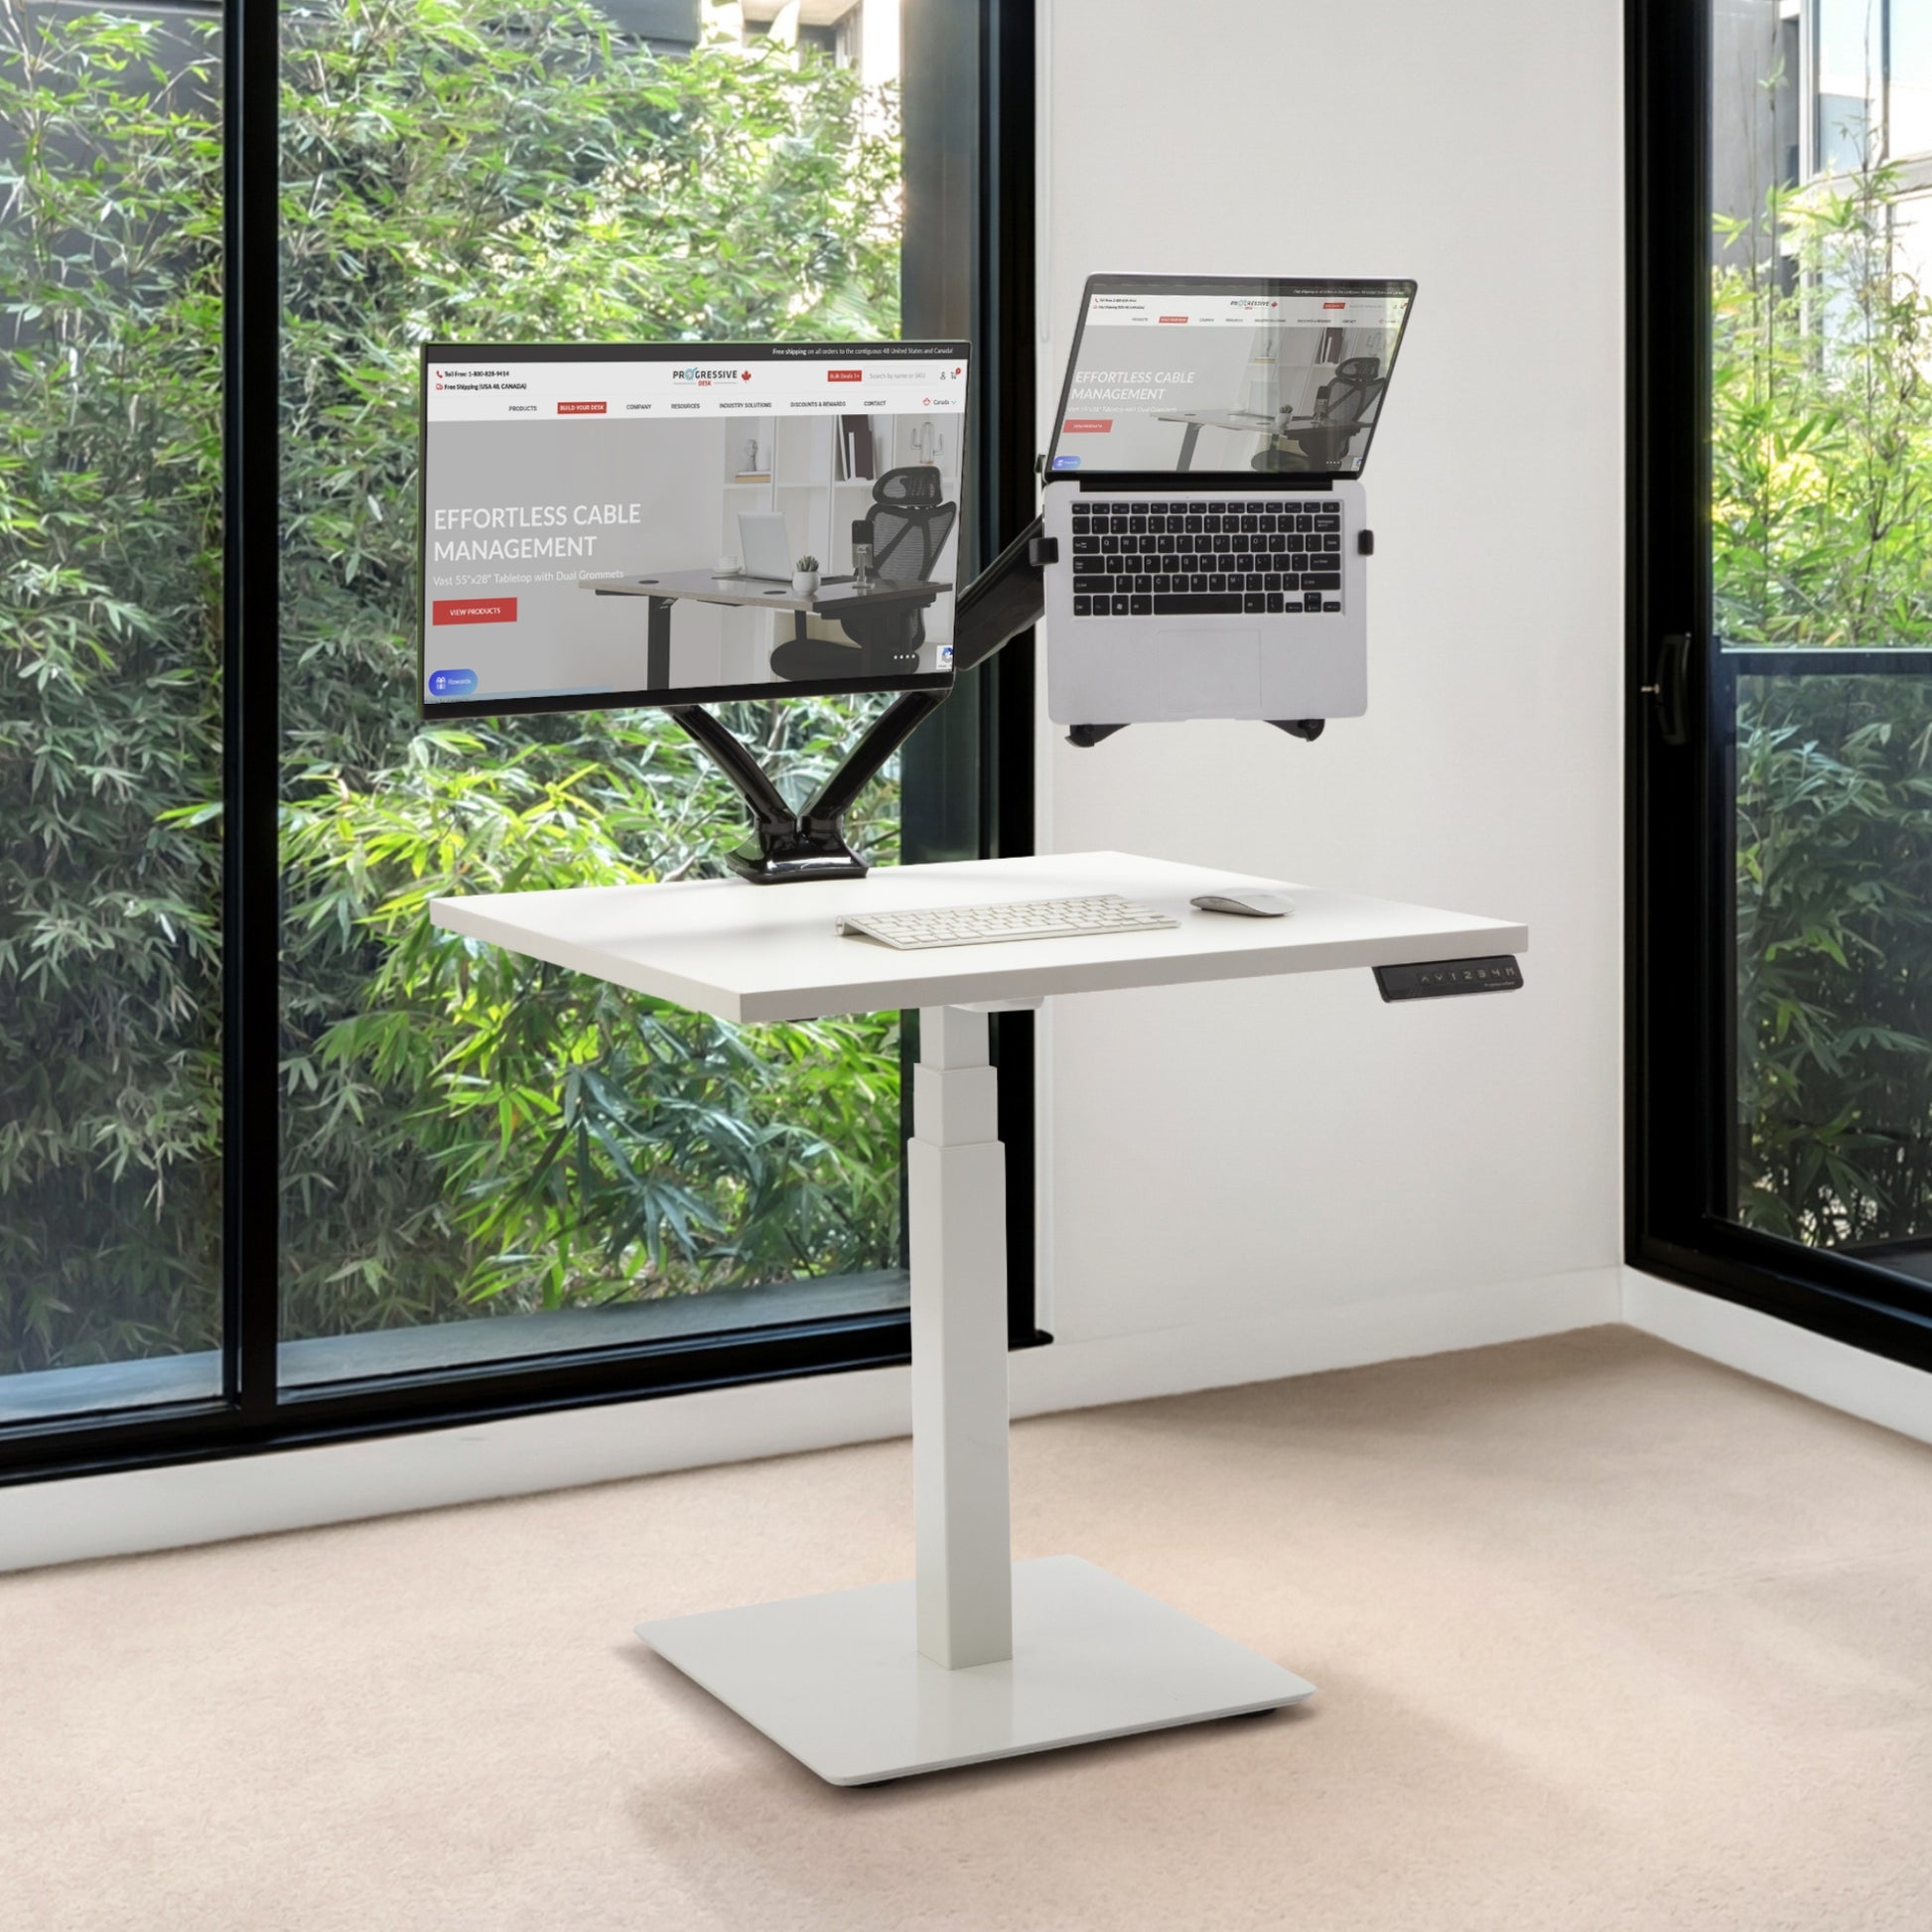 Small Ergo Height Adjustable Standing Desk Converter White - True Seating